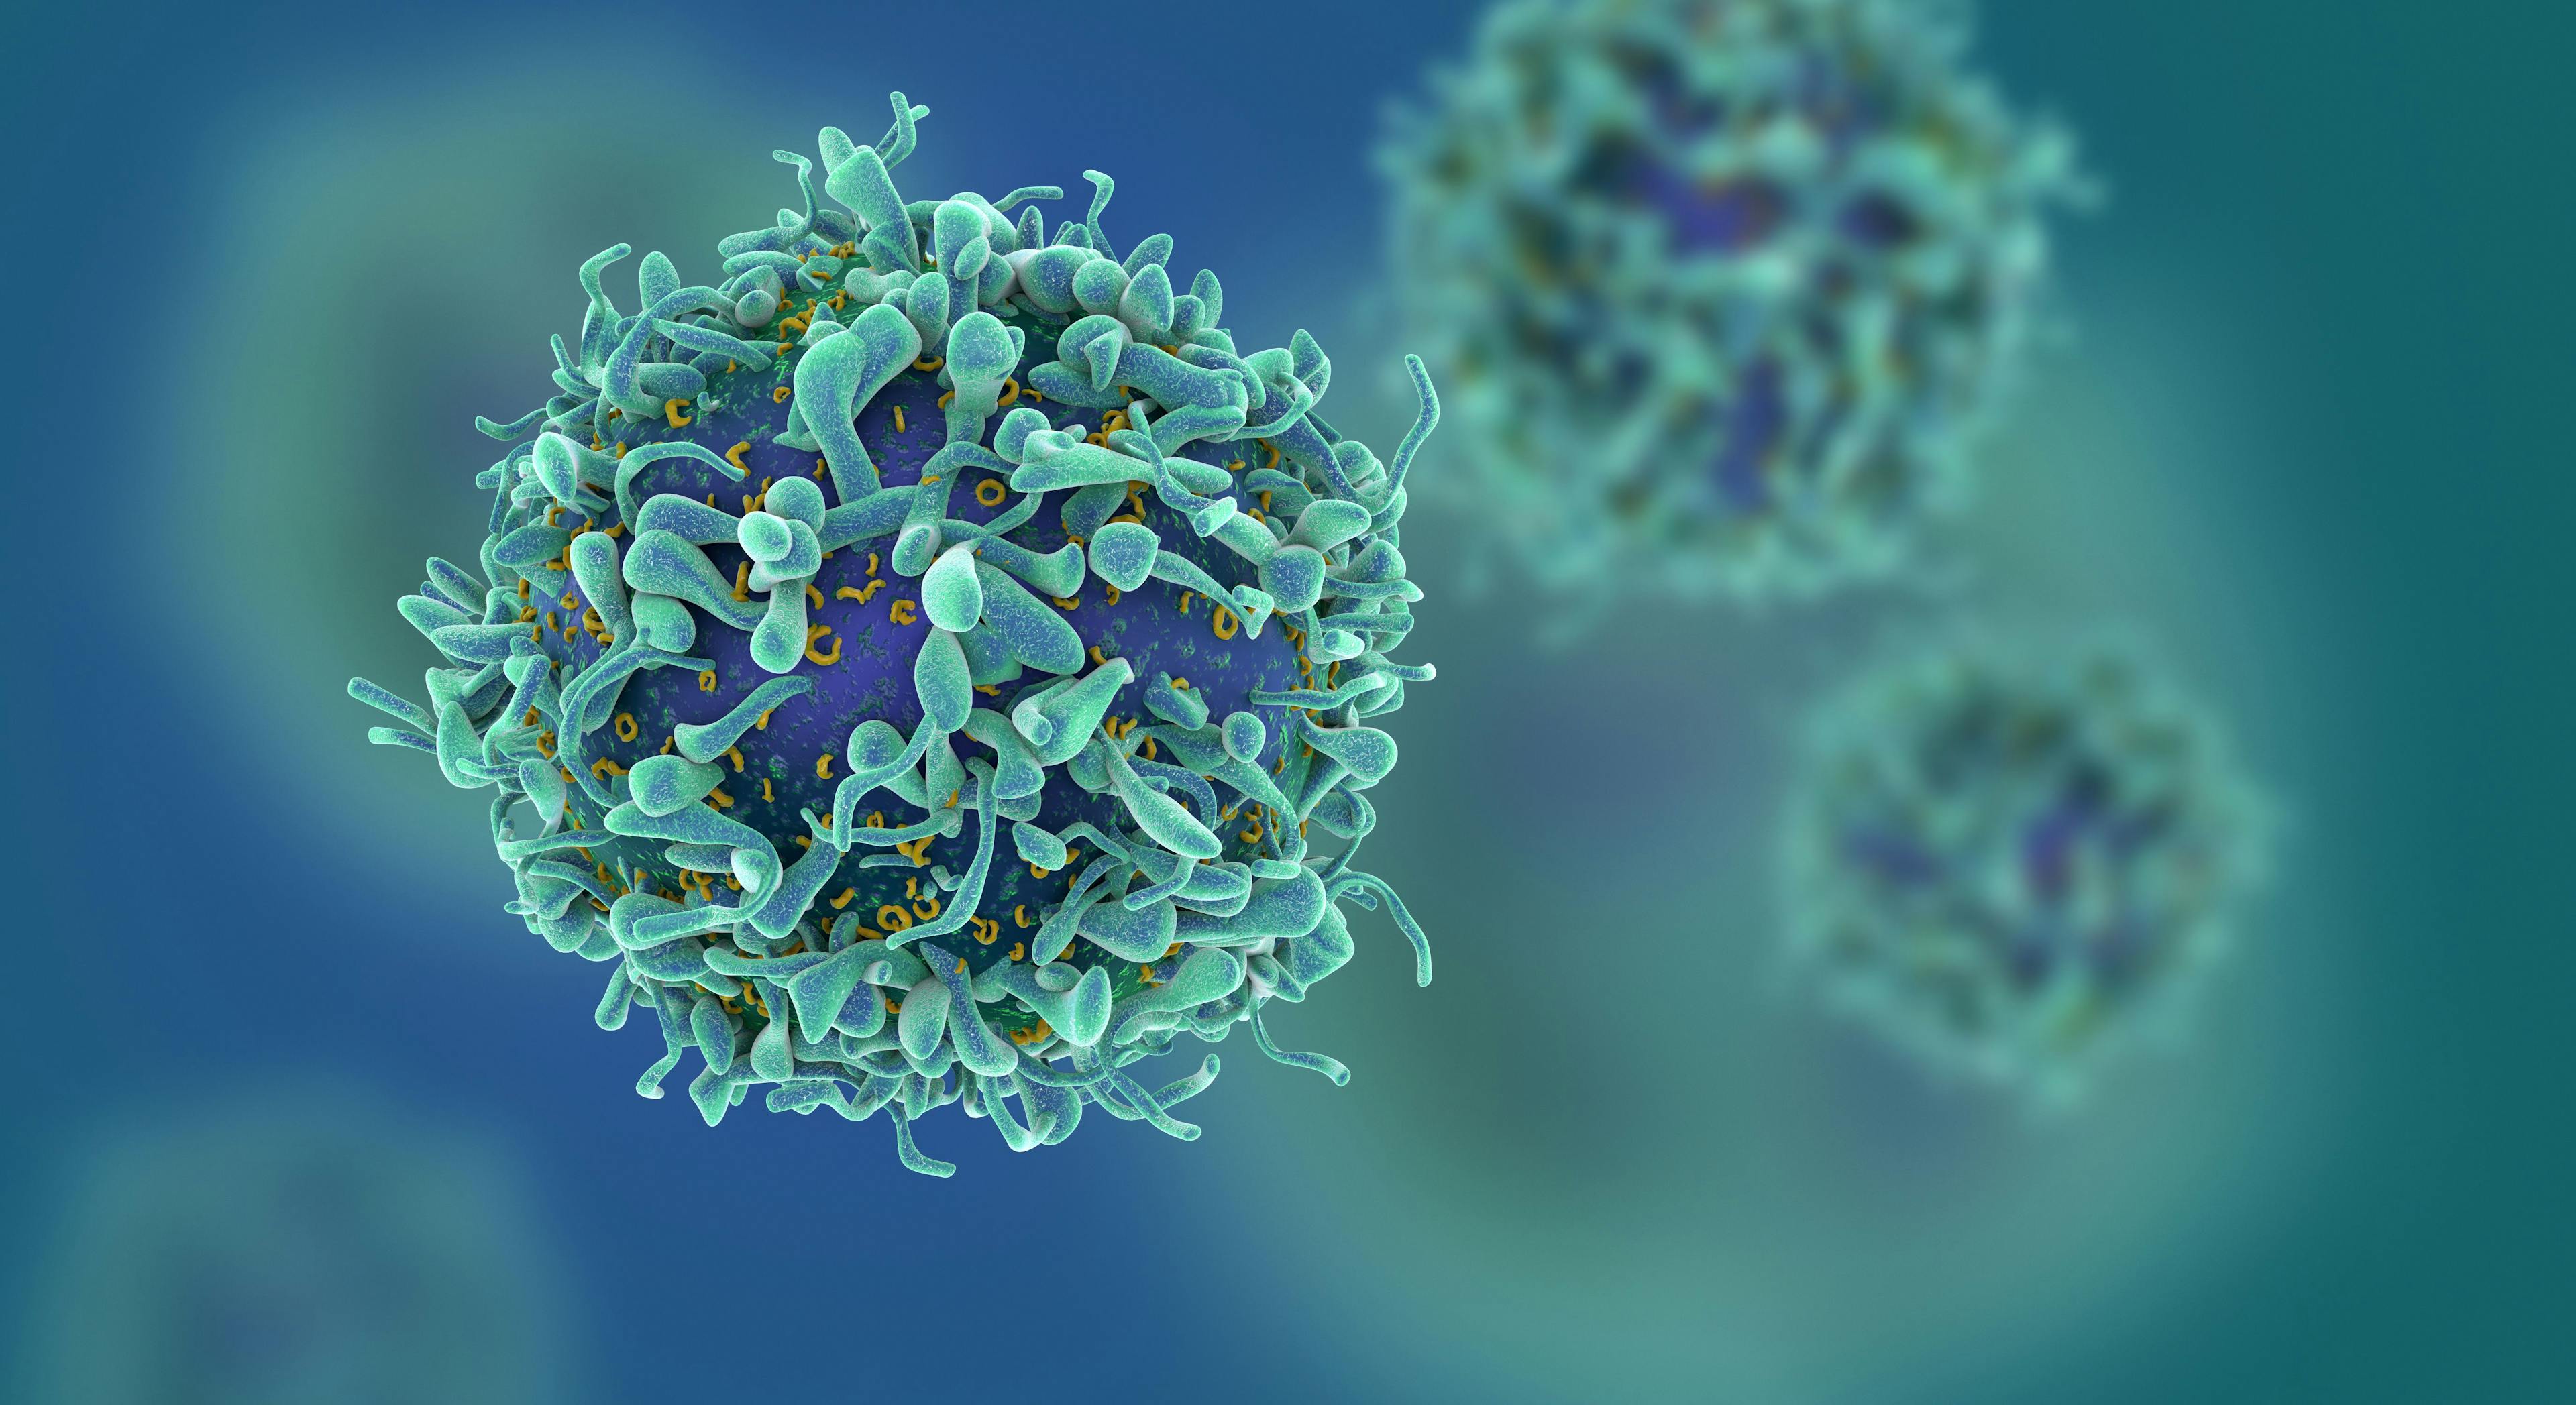 Cg render of t-cells or cancer cells | Image Credit: © fusebulb -www.stock.adobe.com